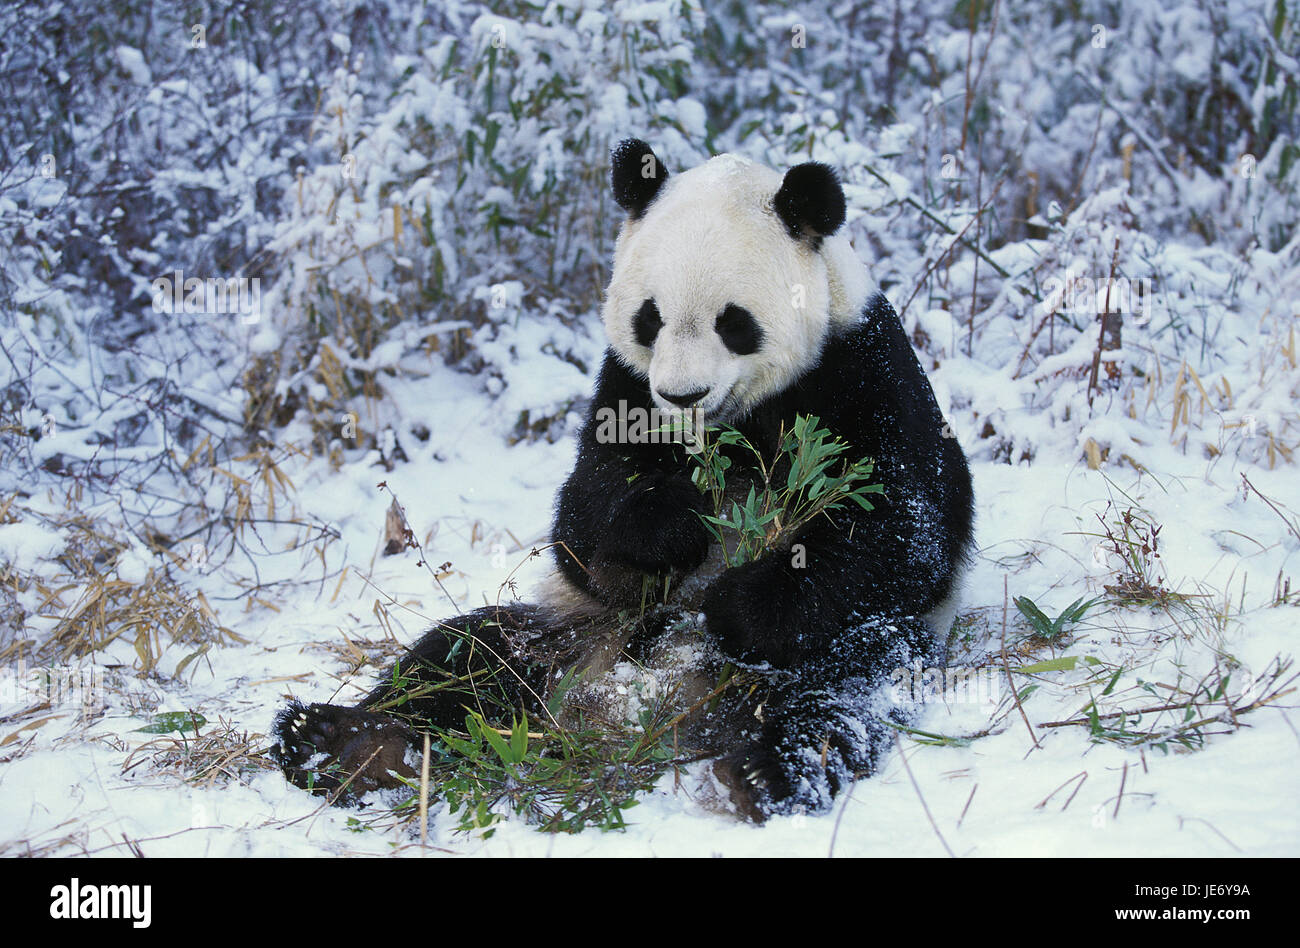 Big panda, Ailuropoda melanoleuca, adult animal, sit, eat snow, bamboo, Wolong reserve, China, Stock Photo